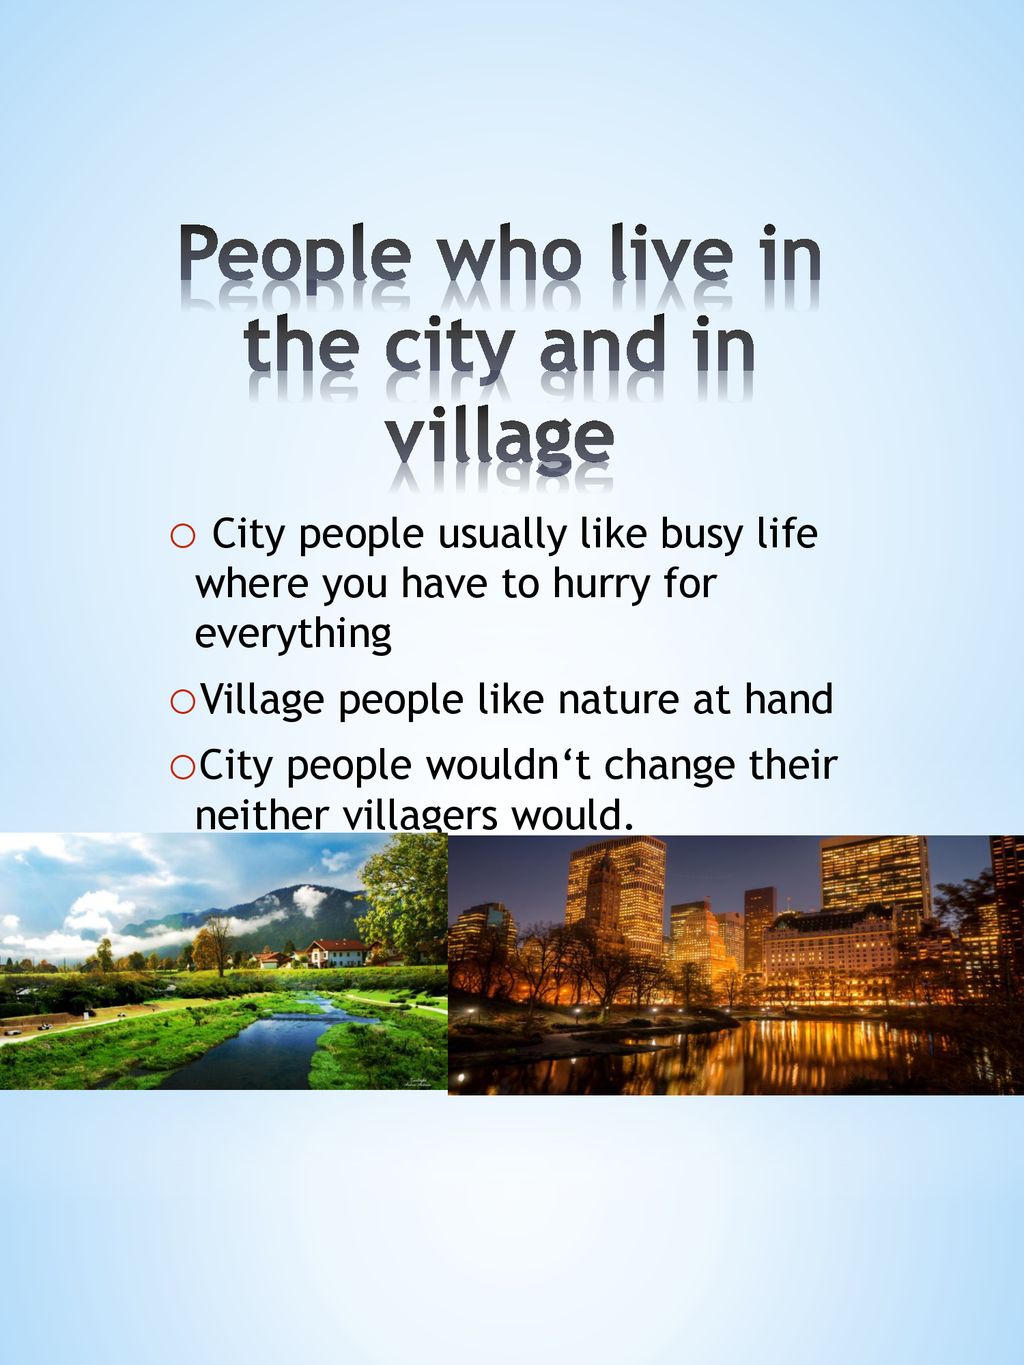 compare village and city life